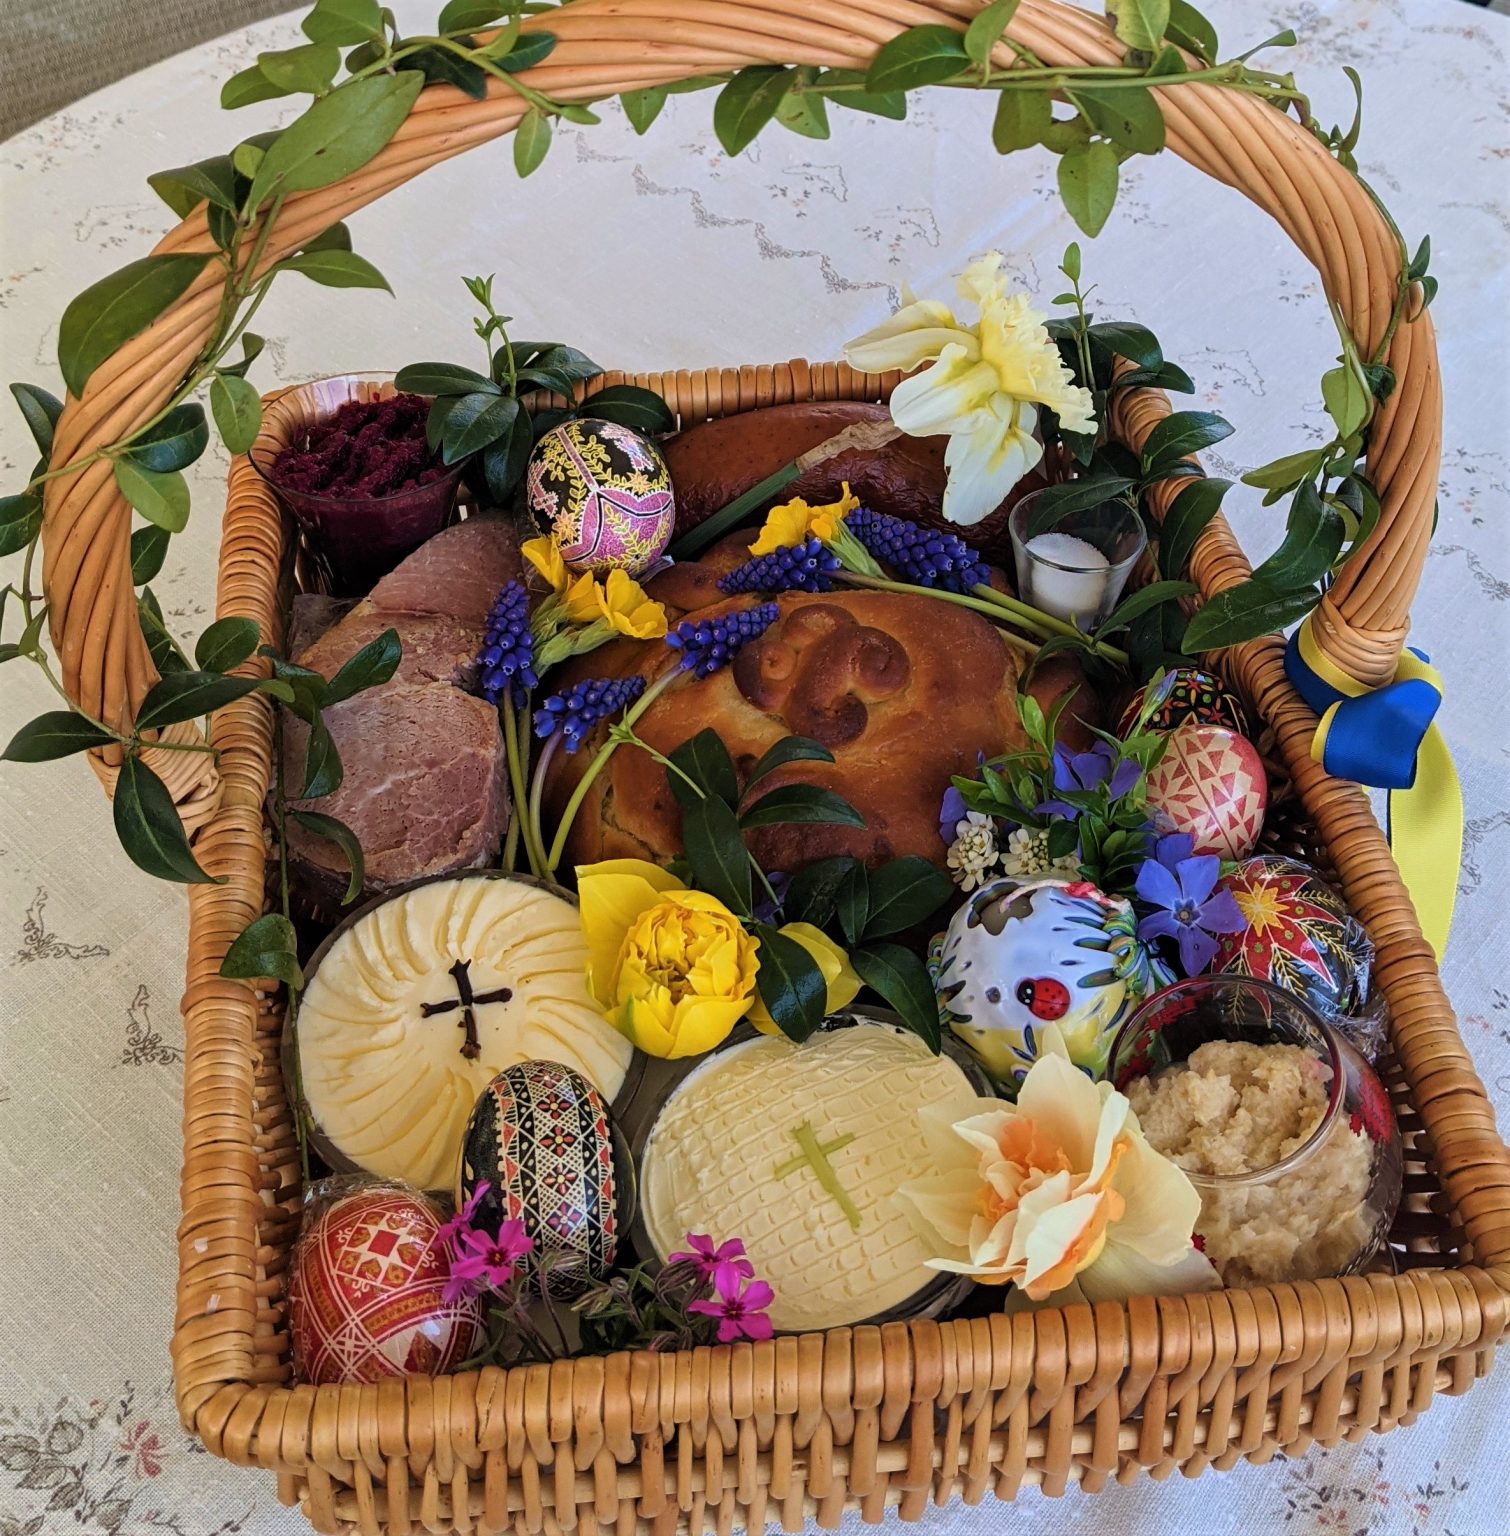 Ukrainian Traditional Easter Basket Special Food and Symbolism